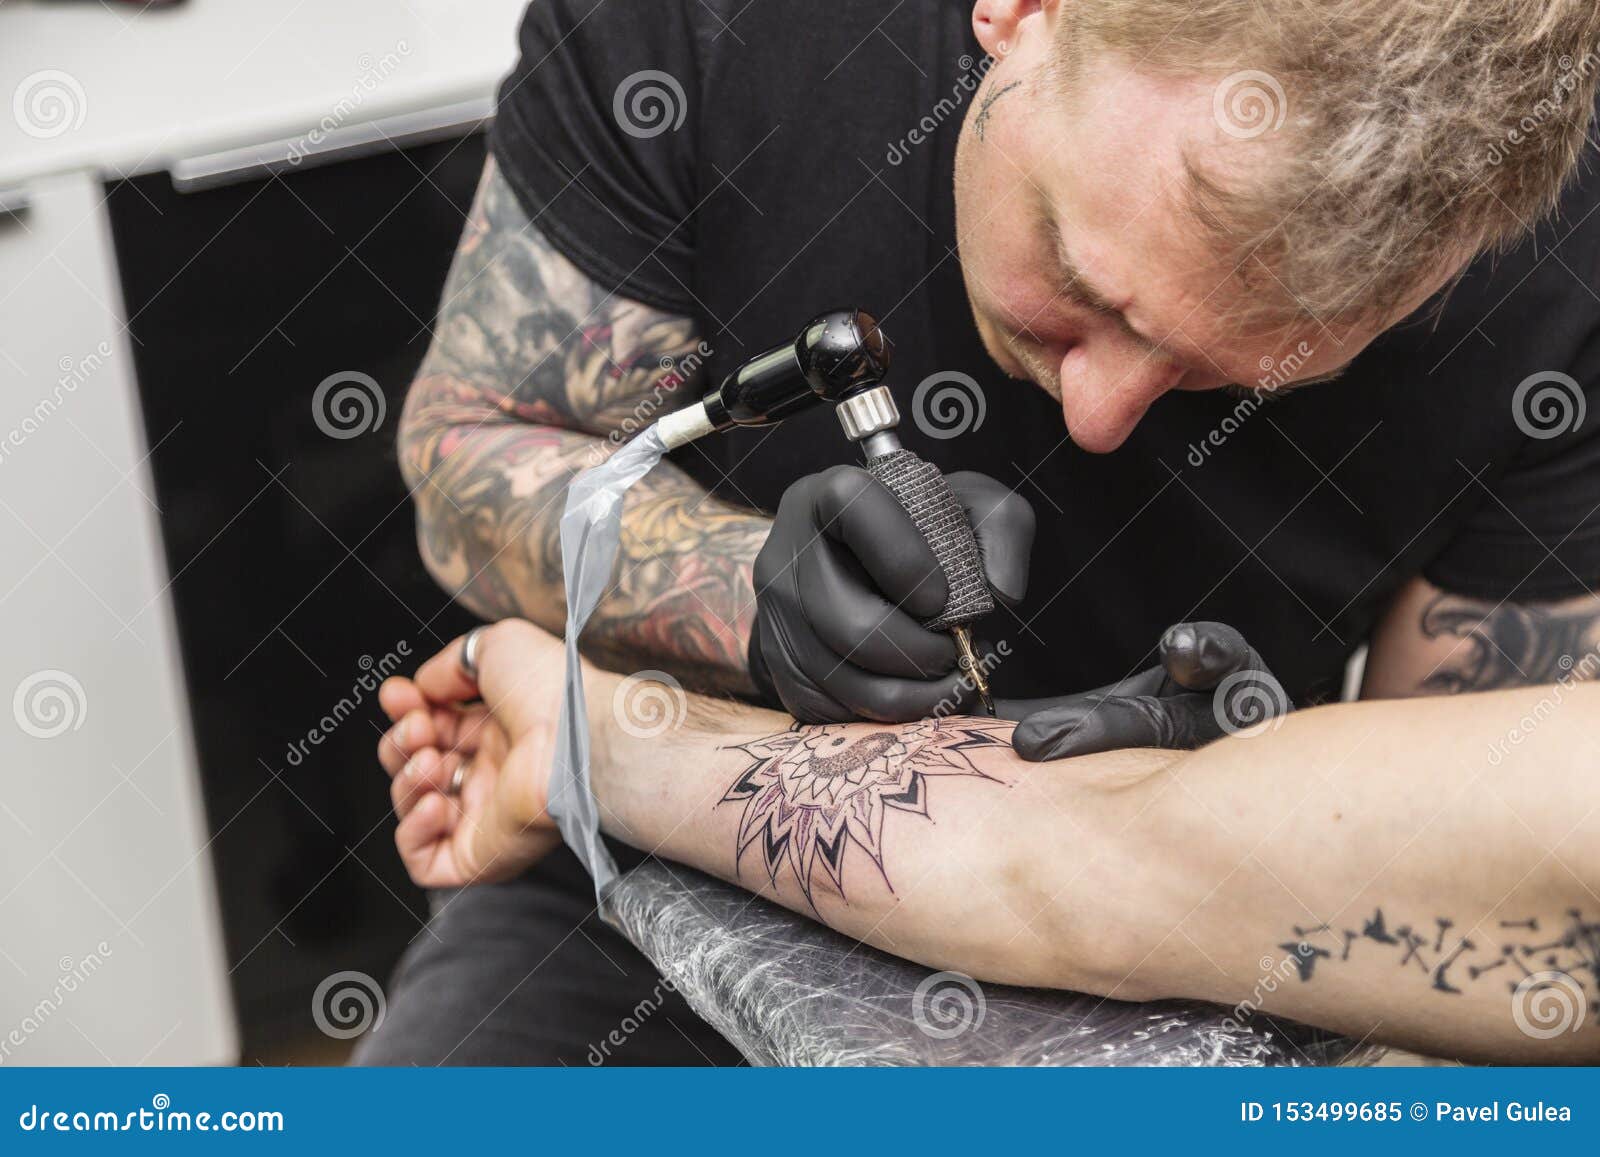 Polish Viking Tattoo by Pavel Ladziak